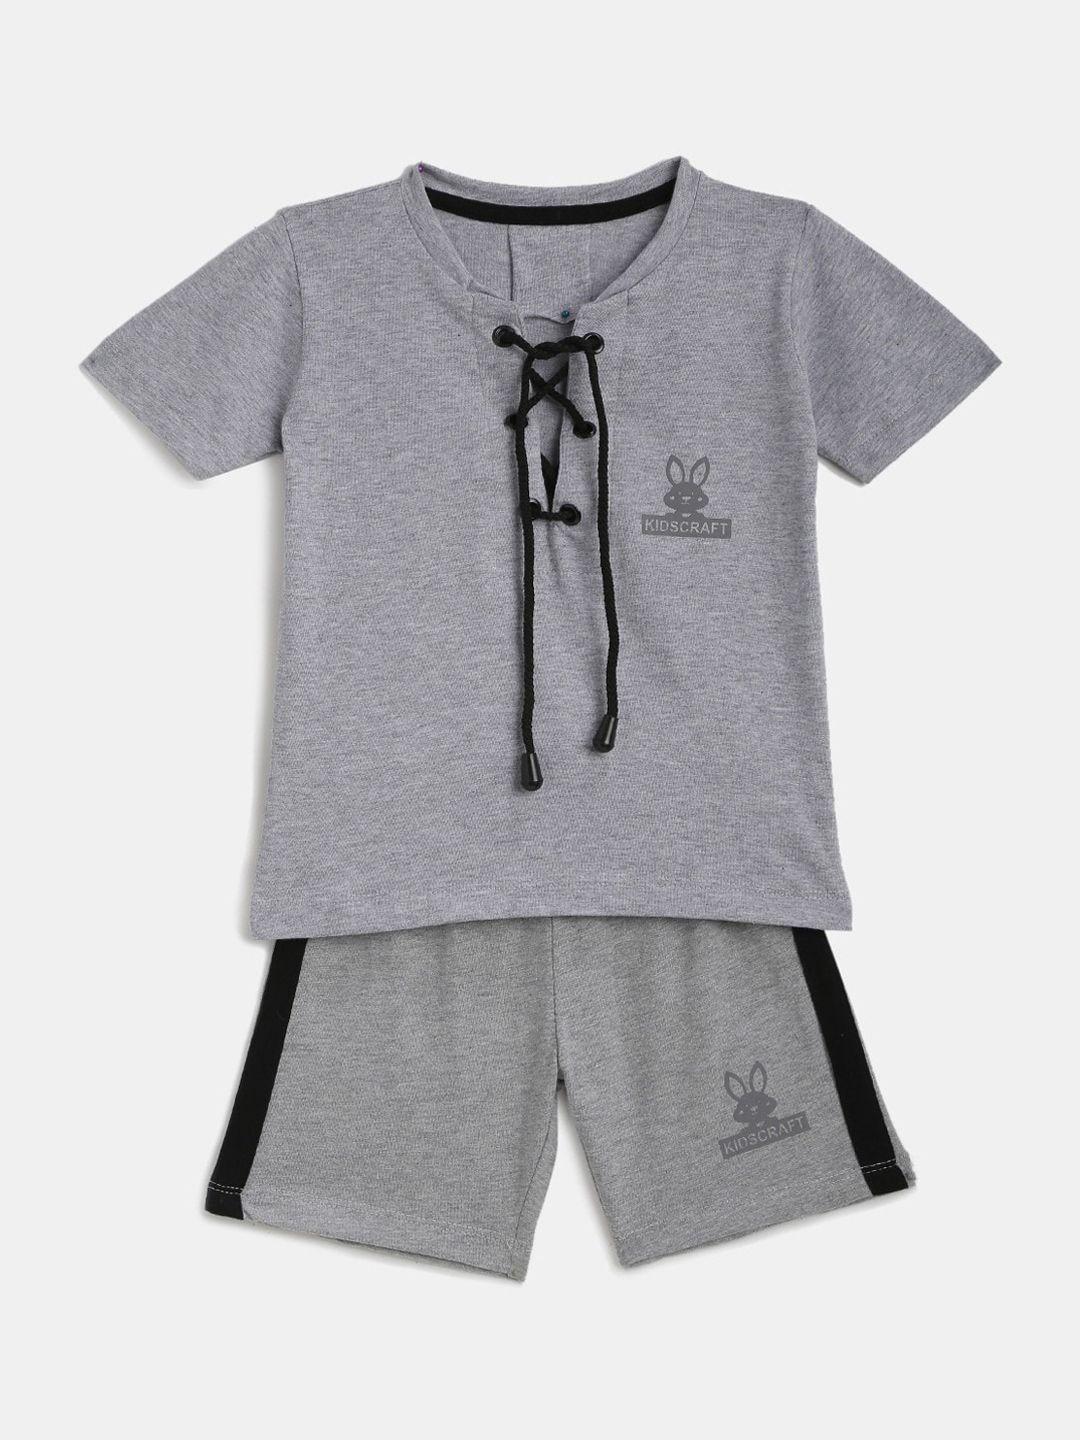 KIDSCRAFT Boys Grey Clothing Set